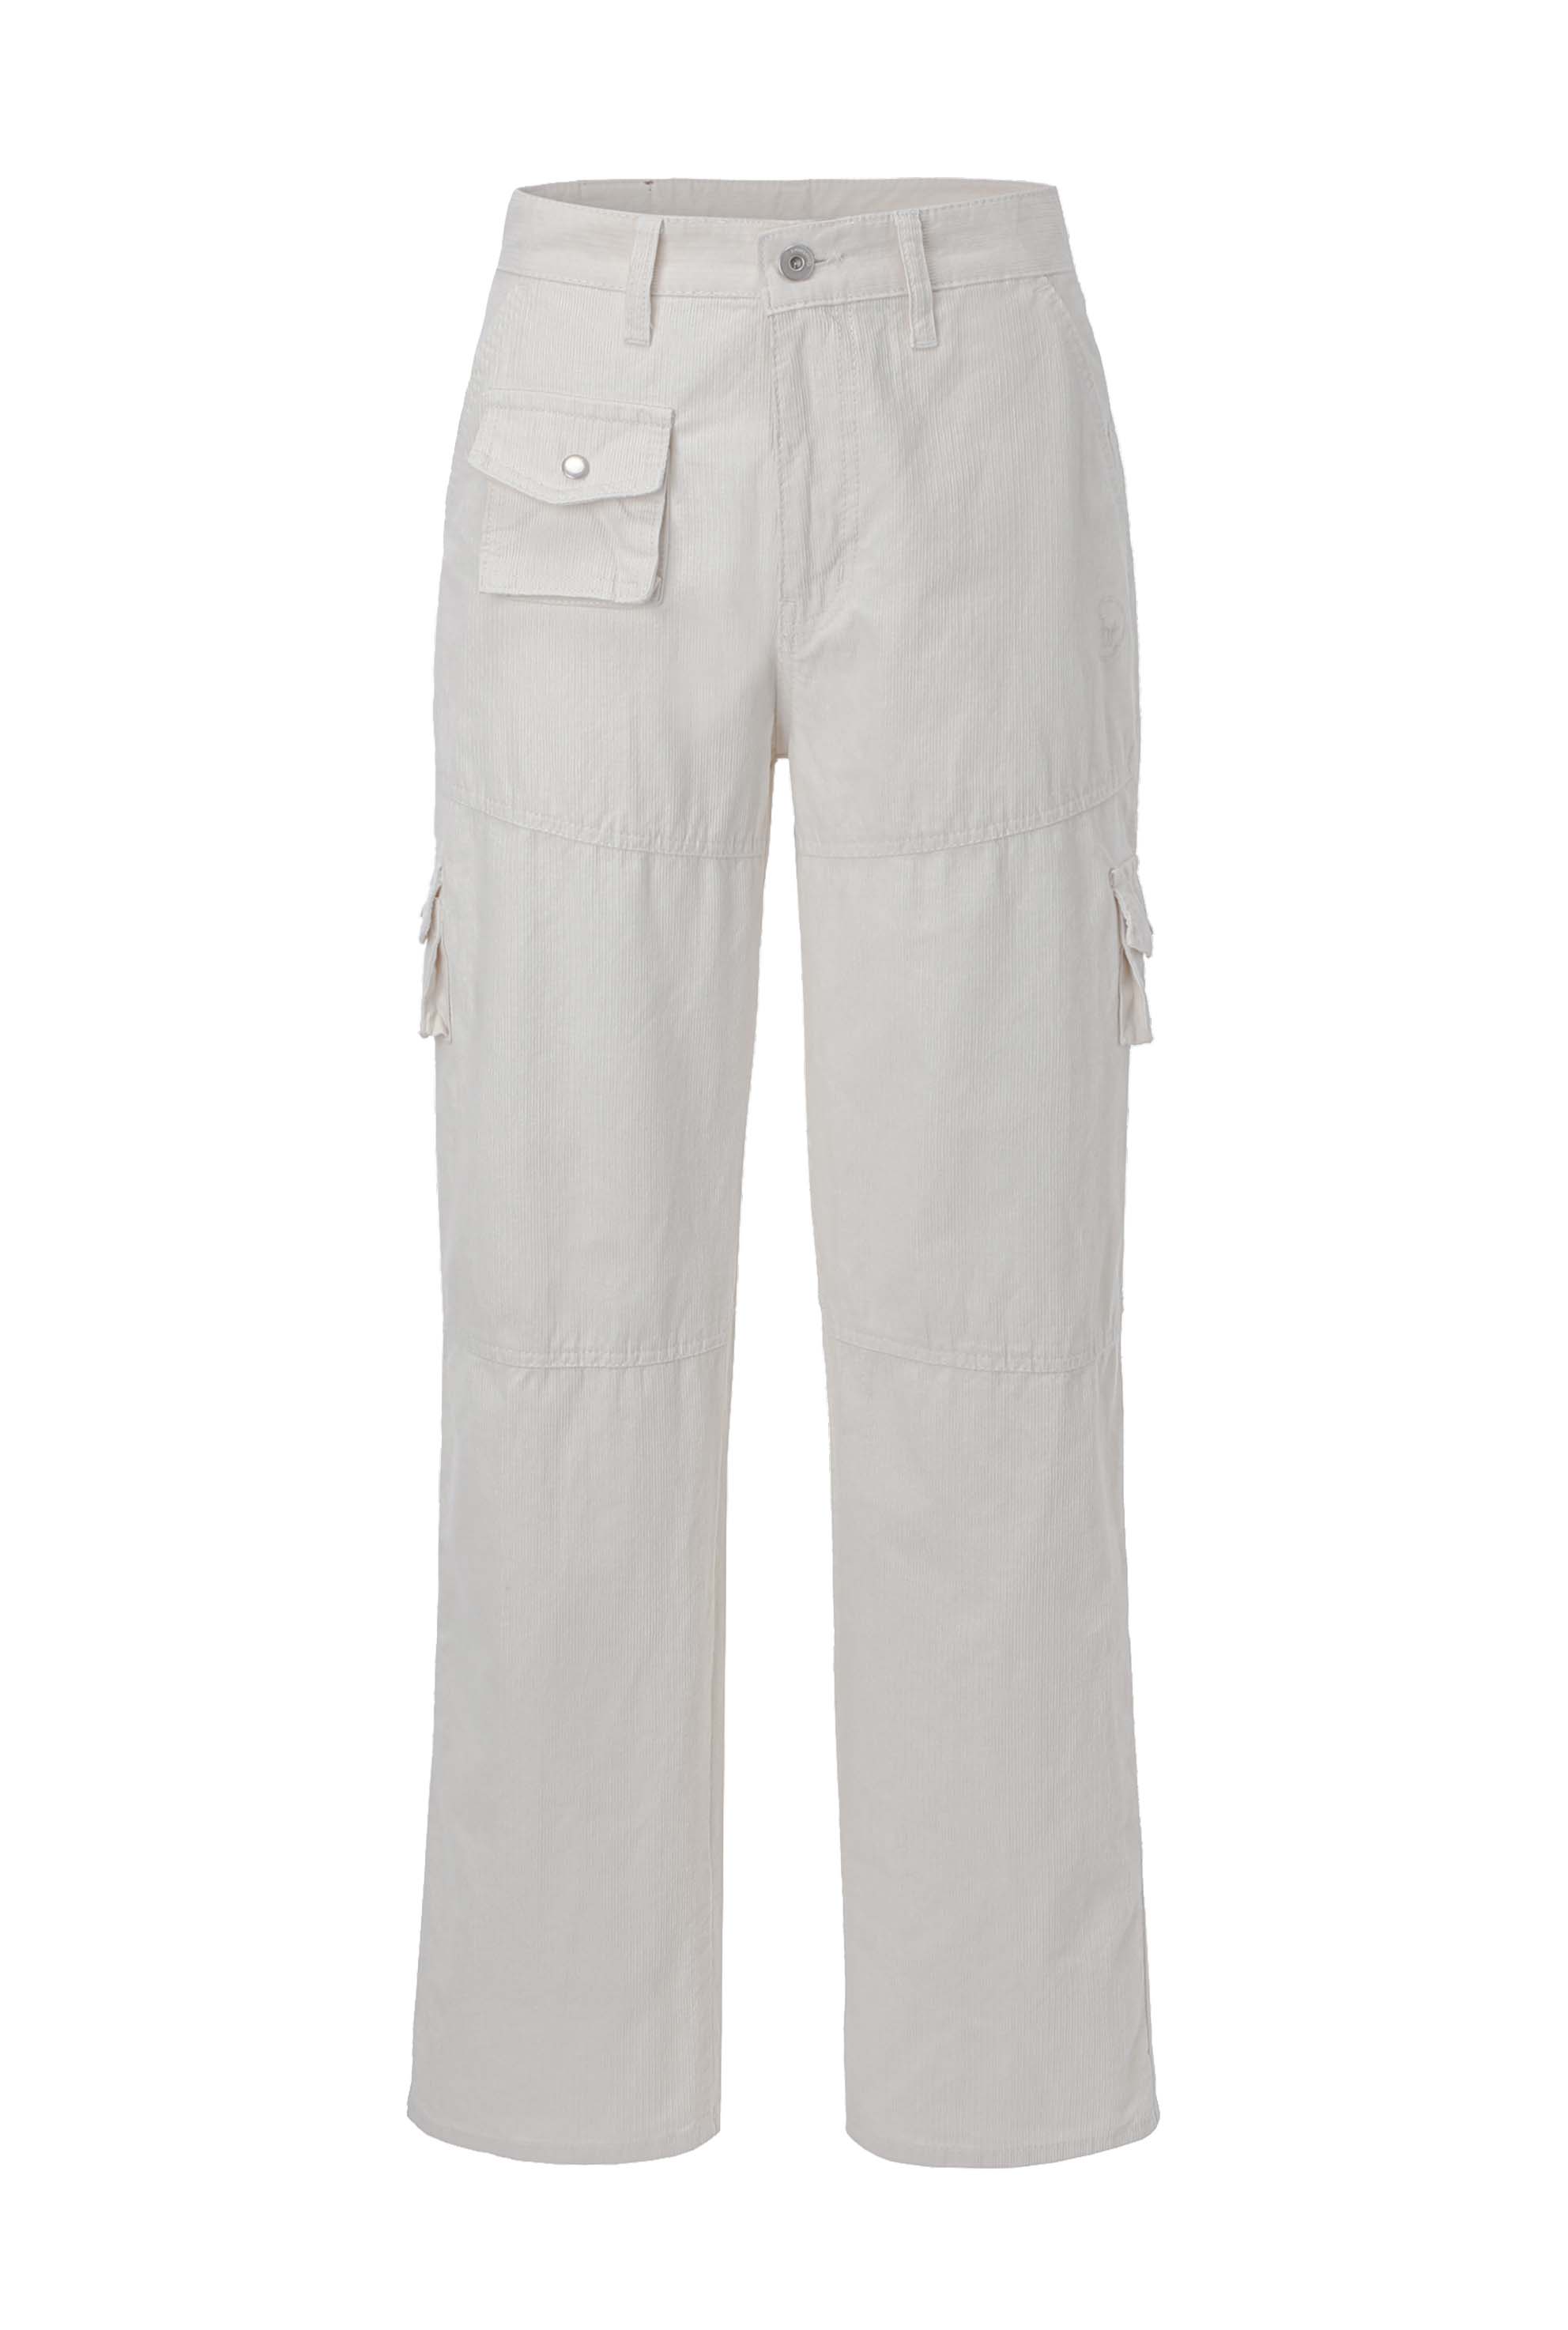 Mini pocket corduroy pants